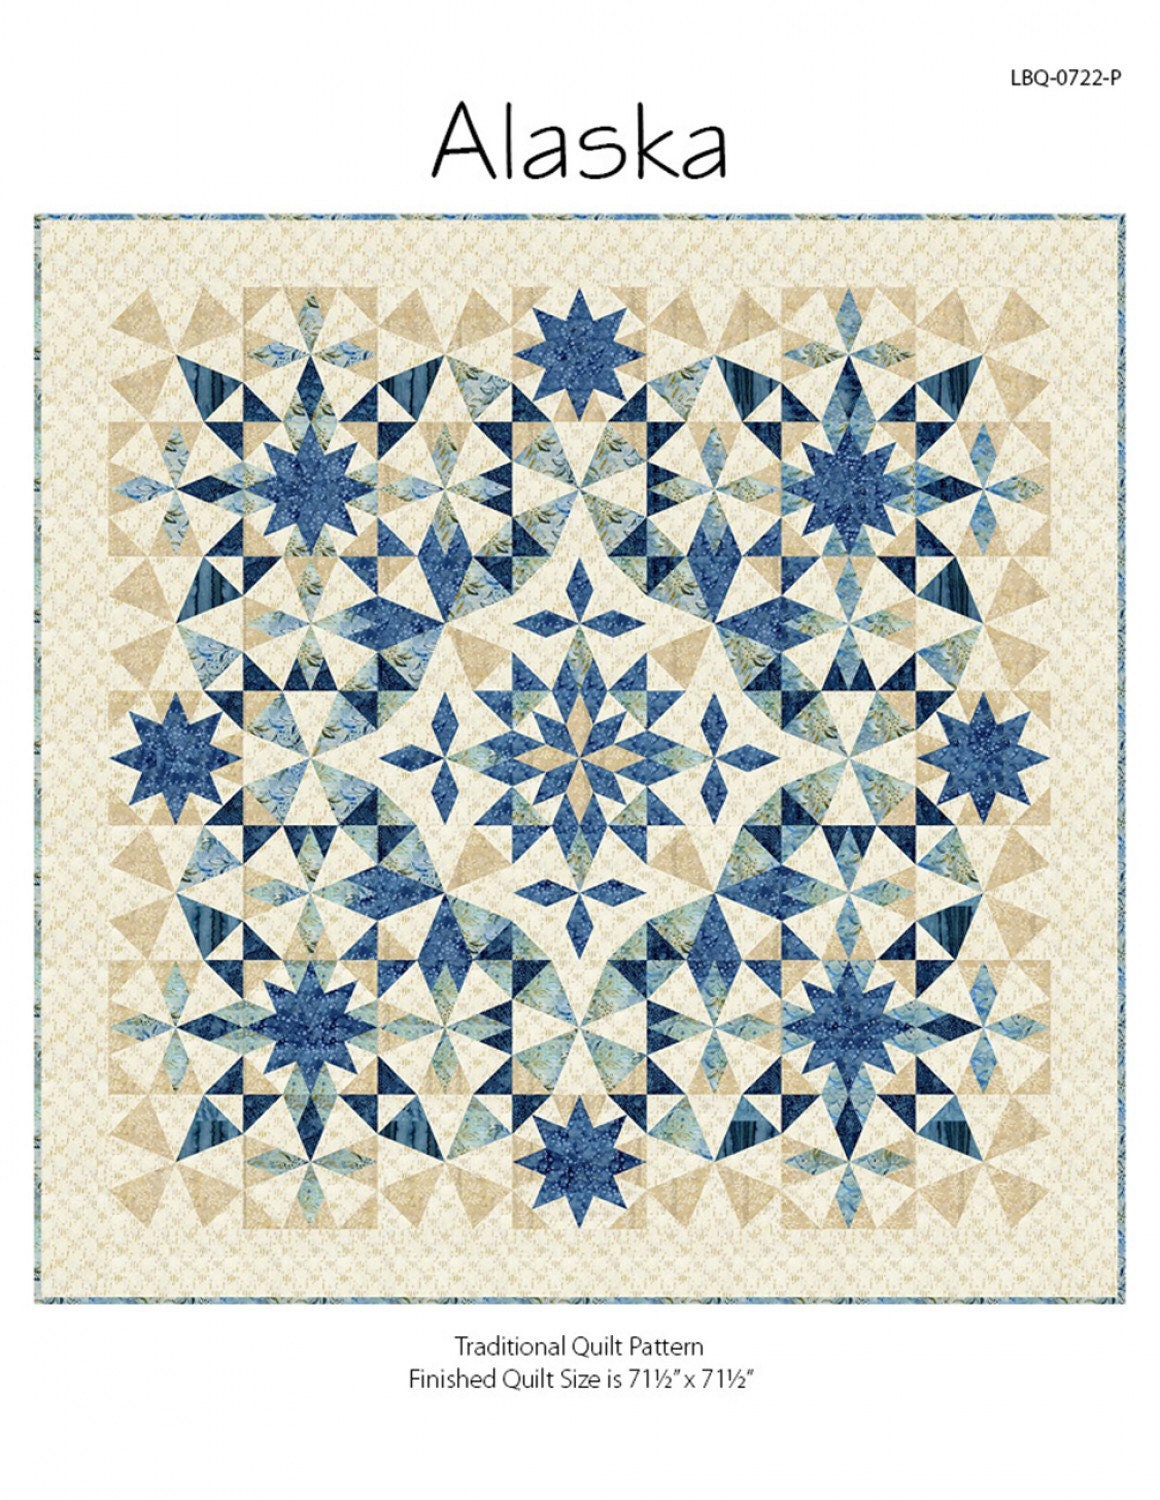 Alaska Pattern 72” x 72” - Laundry Basket Quilts - Edyta Sitar - Optional Acrylic Templates